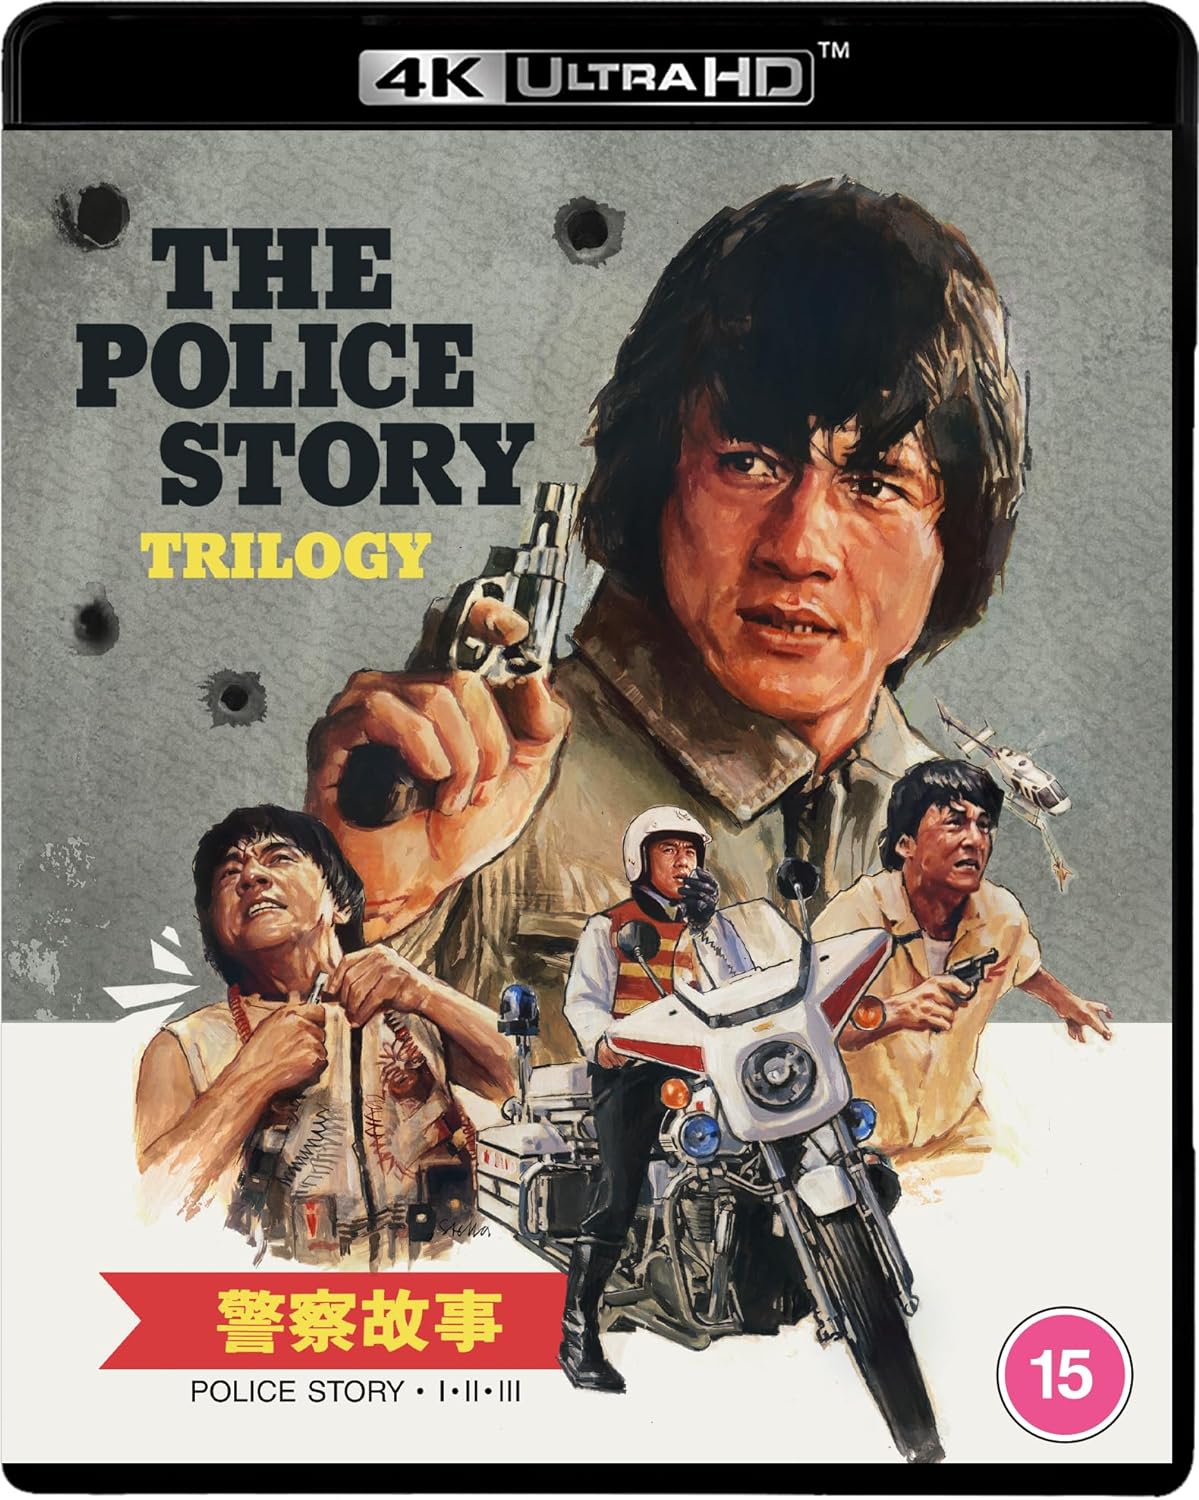 The Police Story Trilogy 4K Ultra HD Standard Ed. (Eureka/Region Free)